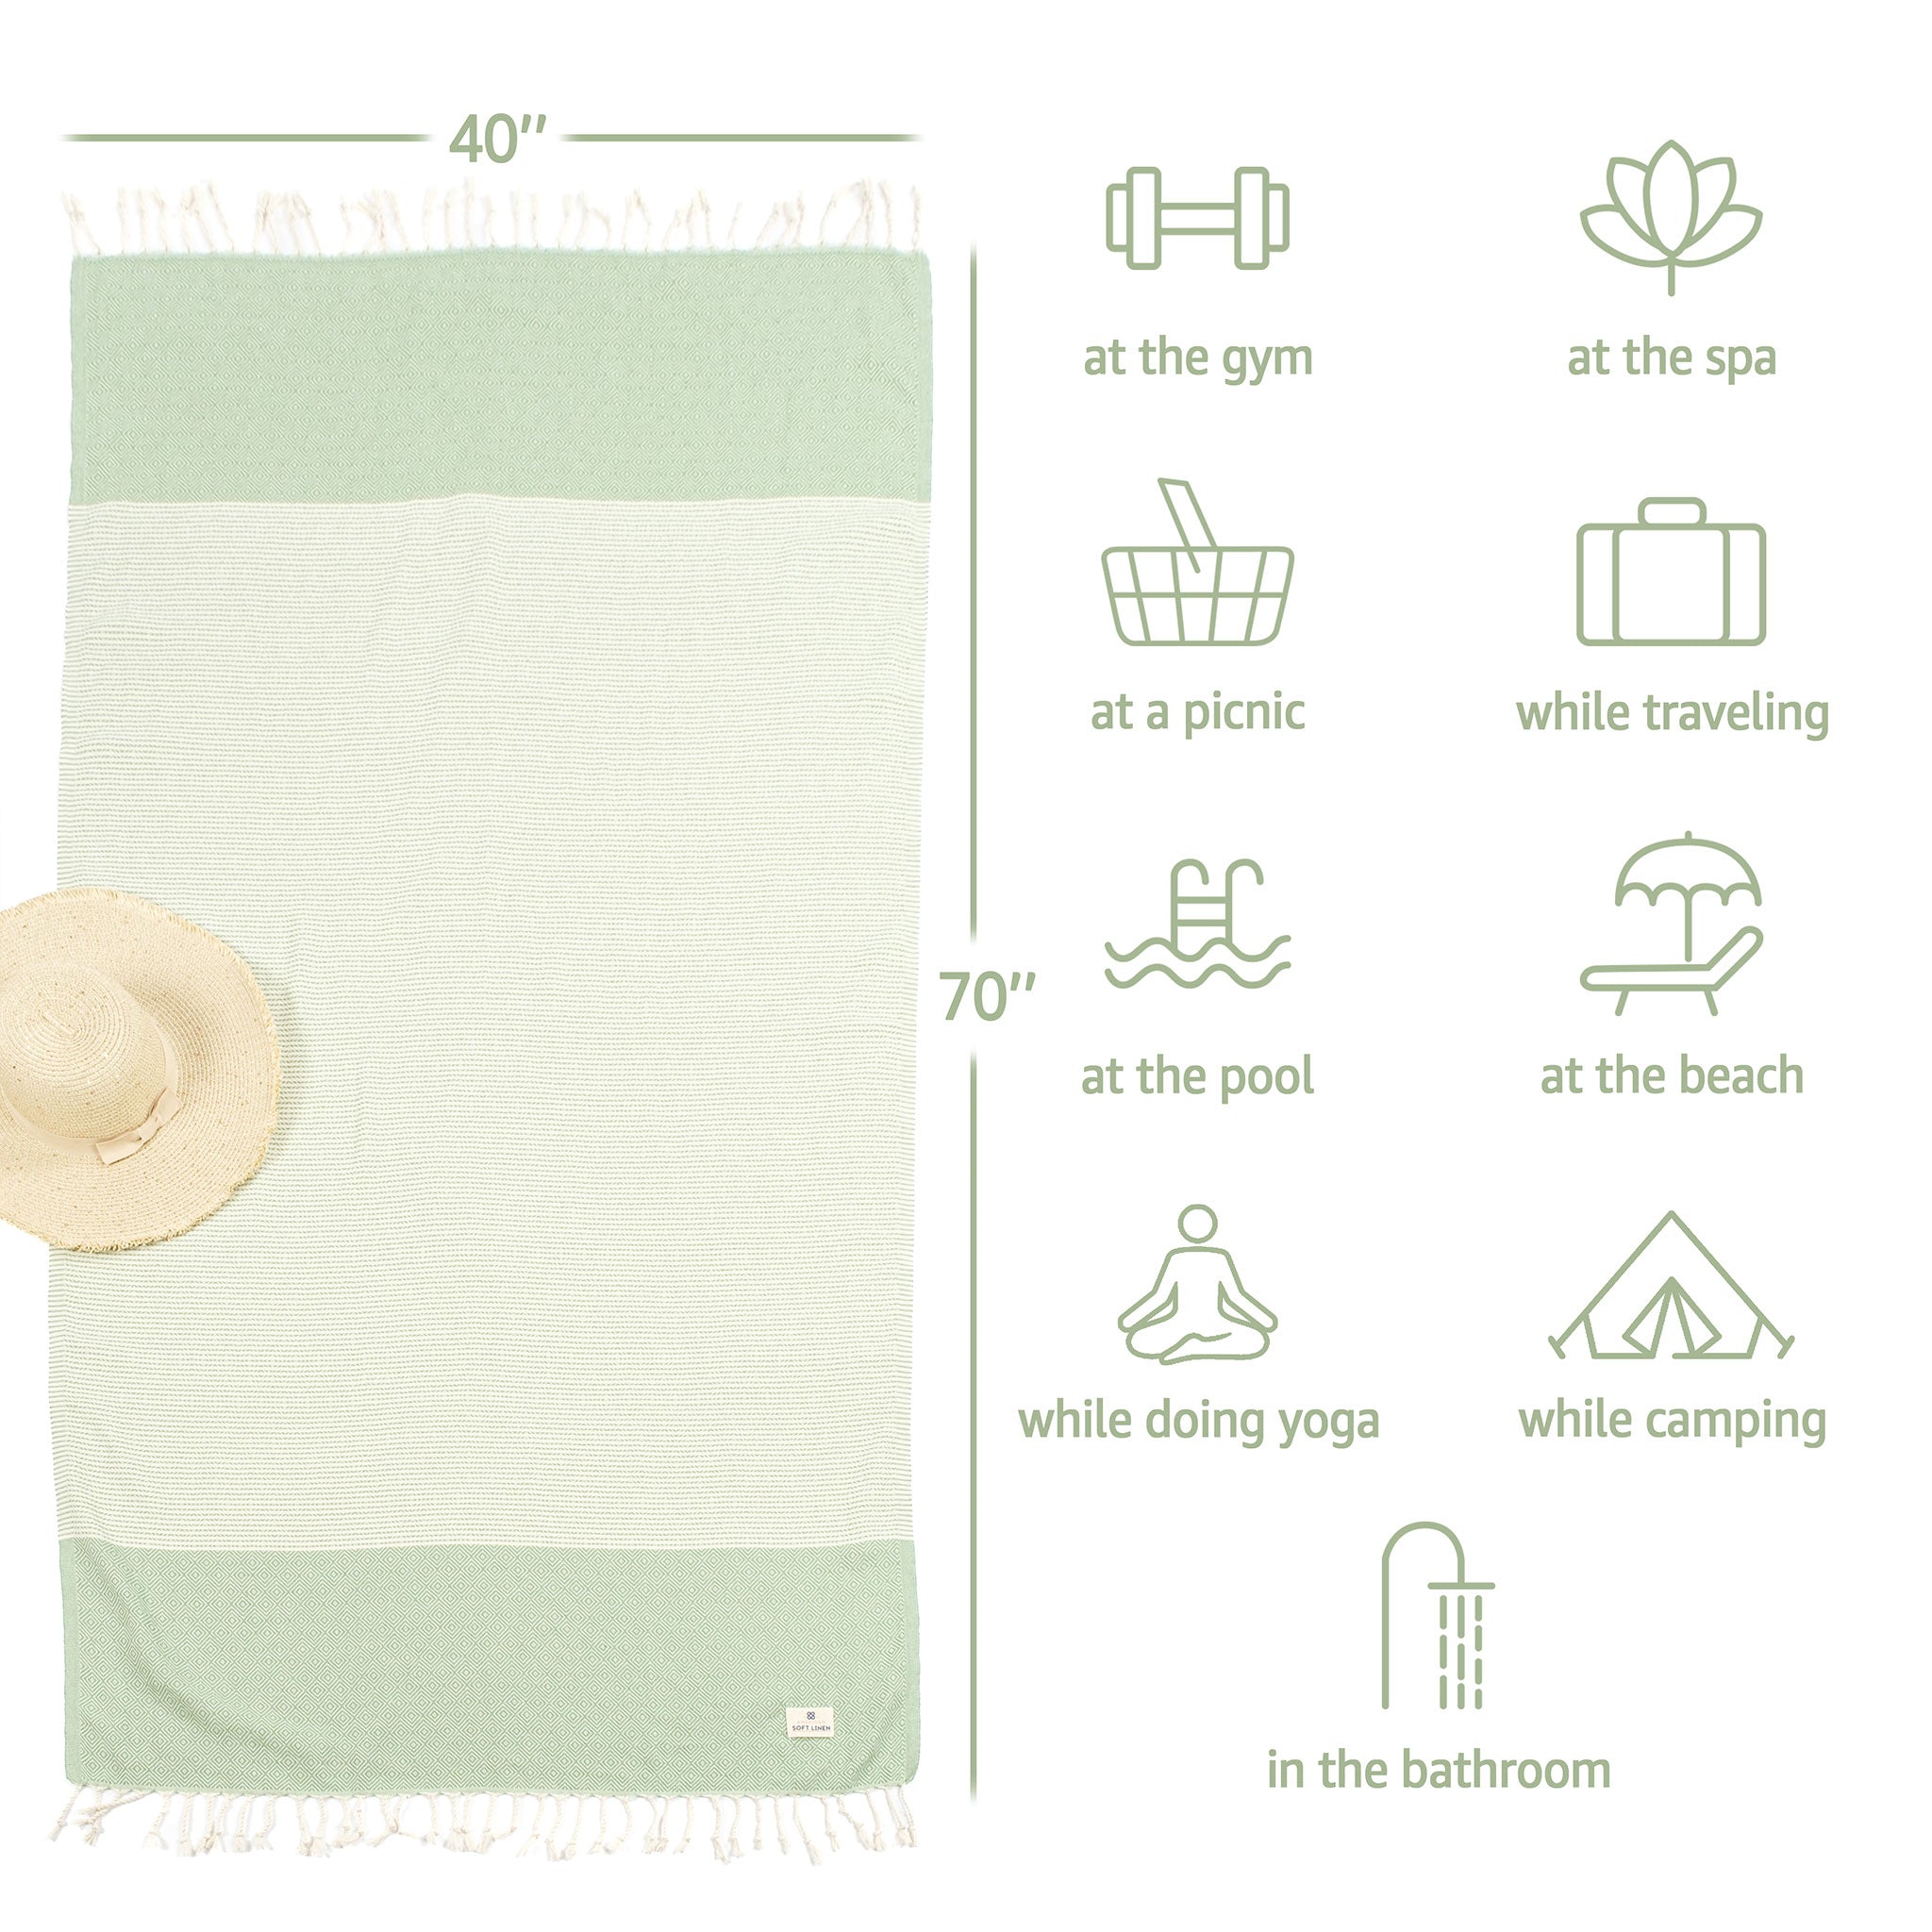 American Soft Linen - 100% Cotton Turkish Peshtemal Towels 40x70 Inches - Green - 4